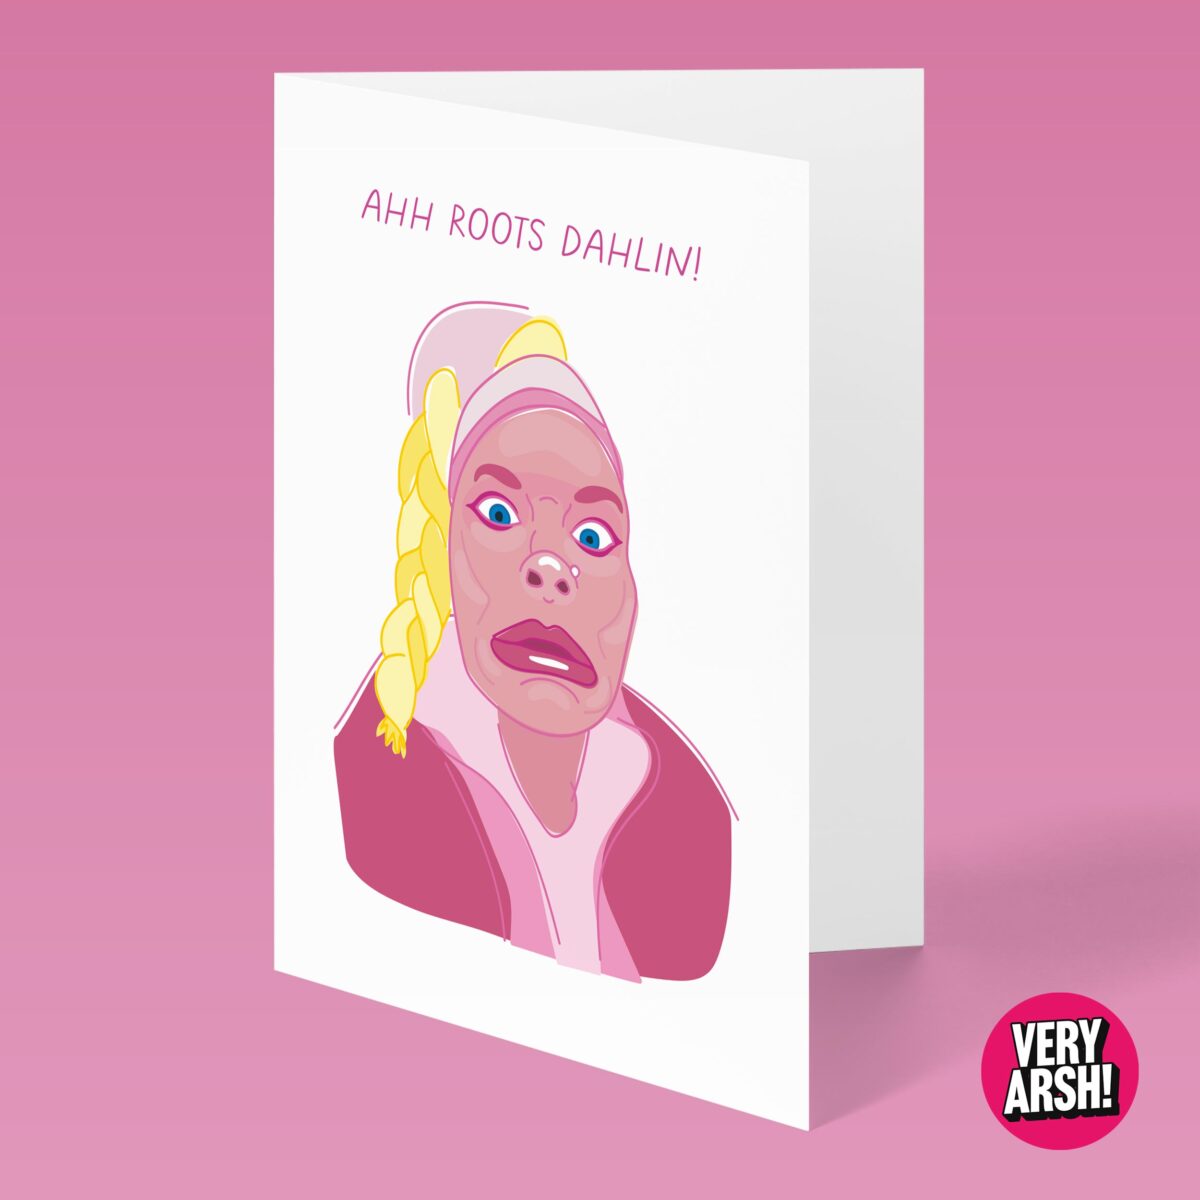 Ahh Roots Dahlin!- Chelsea Lee Art from TikTok inspired Greeting Card, Birthday Card